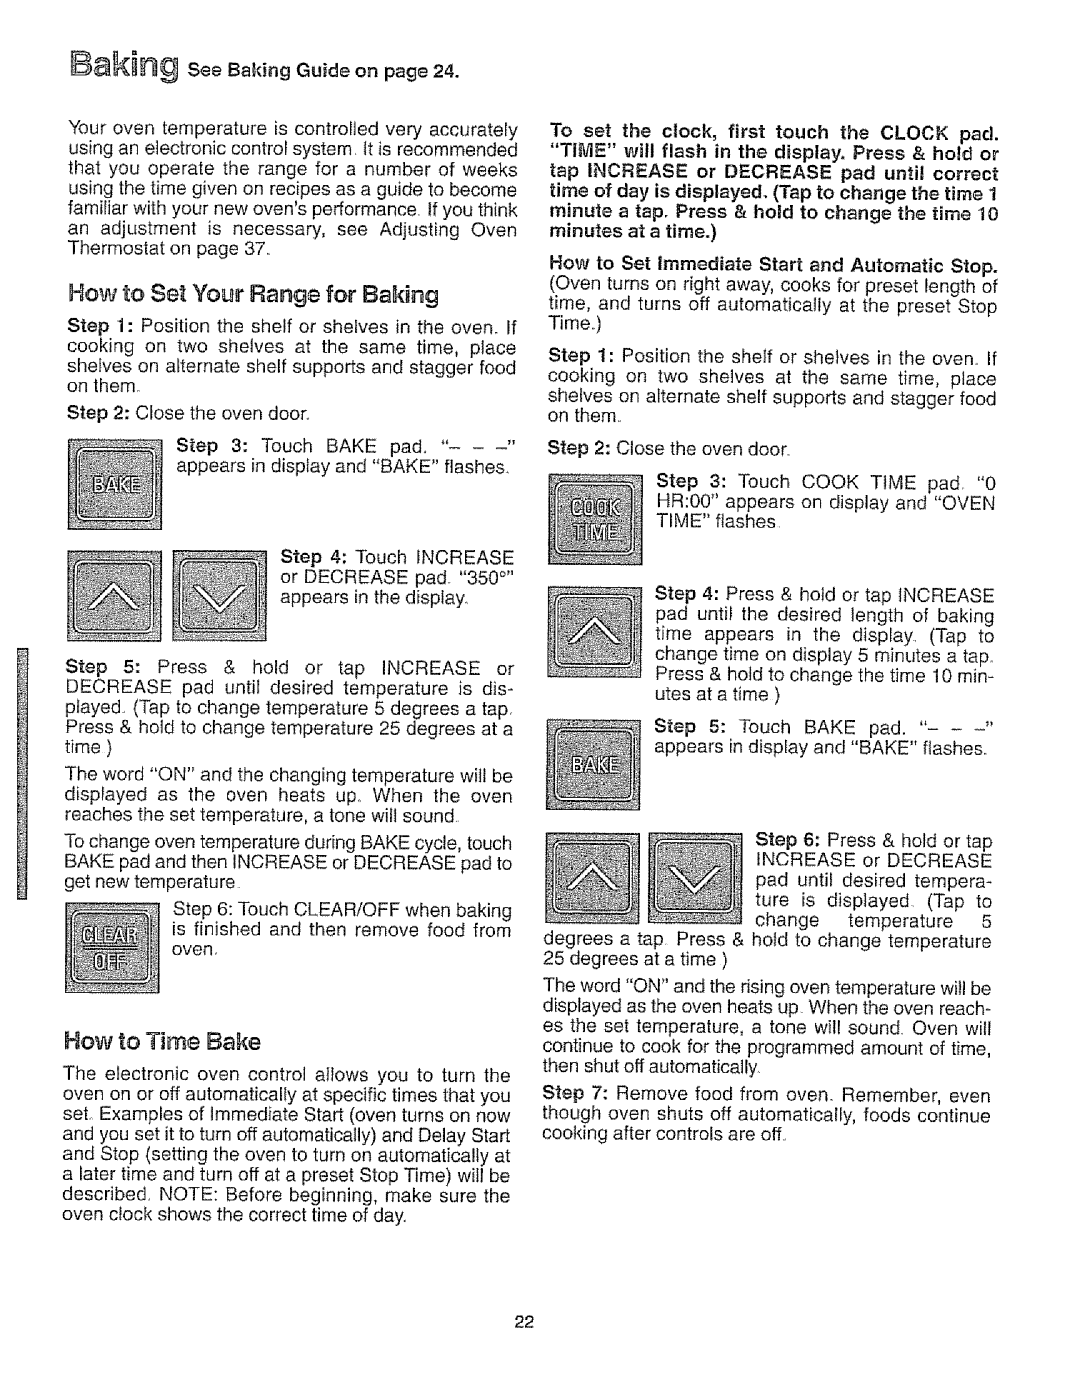 Kenmore 73811, 73819, 73511, 73515 manual Baking seeBakingGuideonpage24, How to Set Your Range for Baking, How to Time Bake 